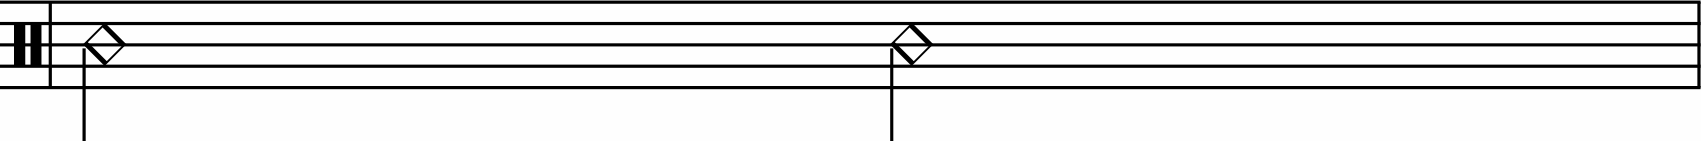 Half note rhythm example.